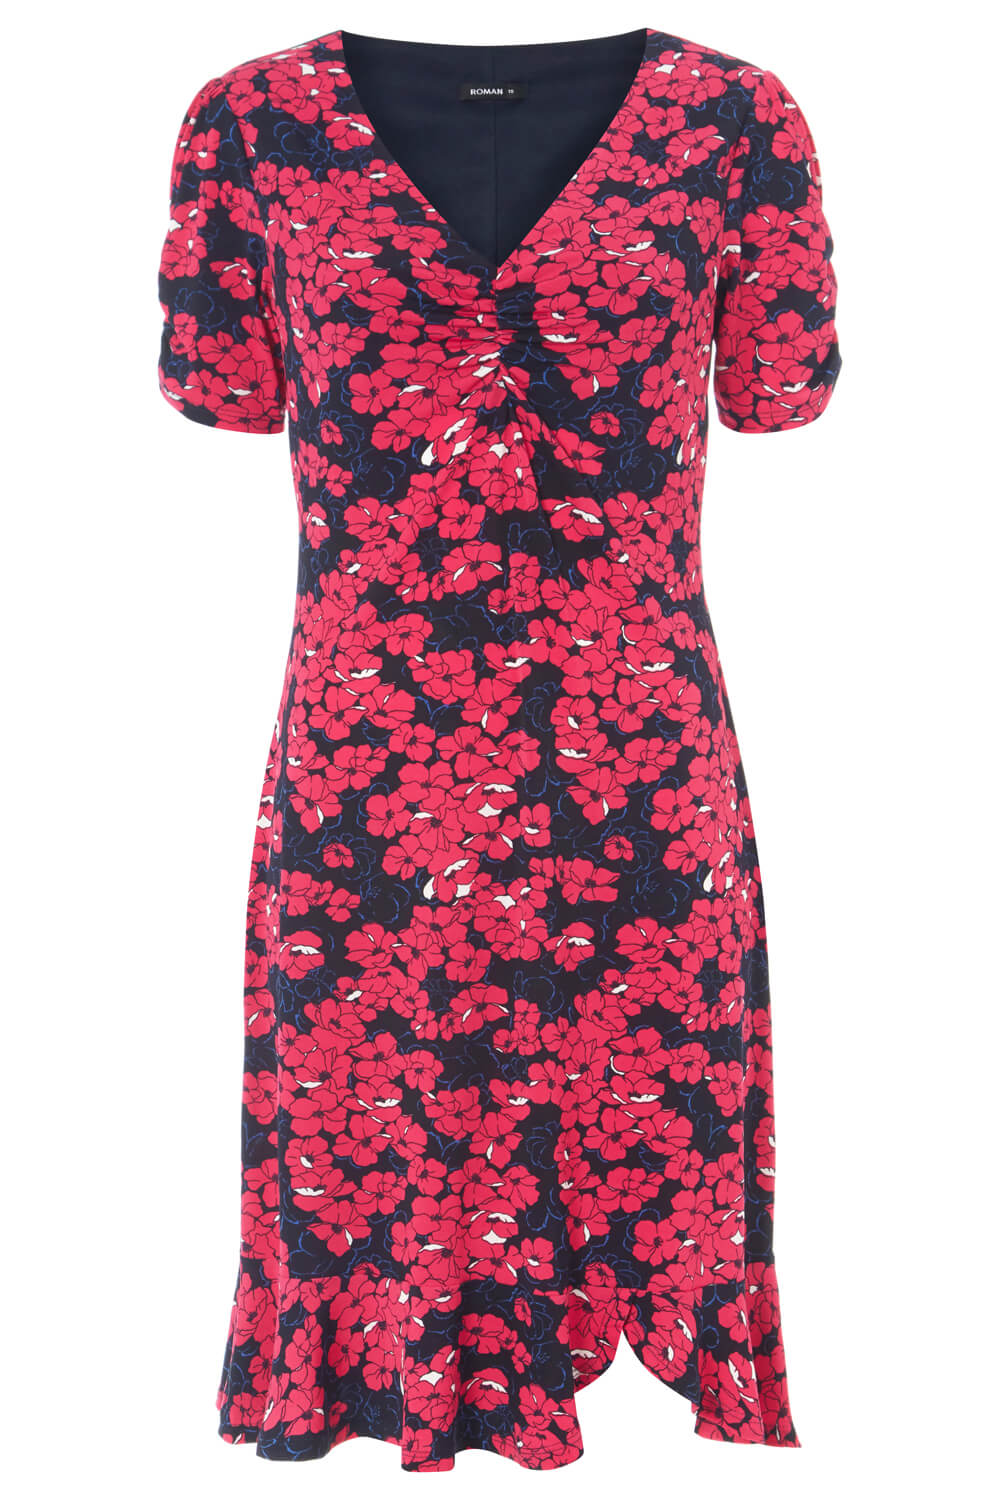 Floral Print Frill Hem Tea Dress in Fuchsia - Roman Originals UK